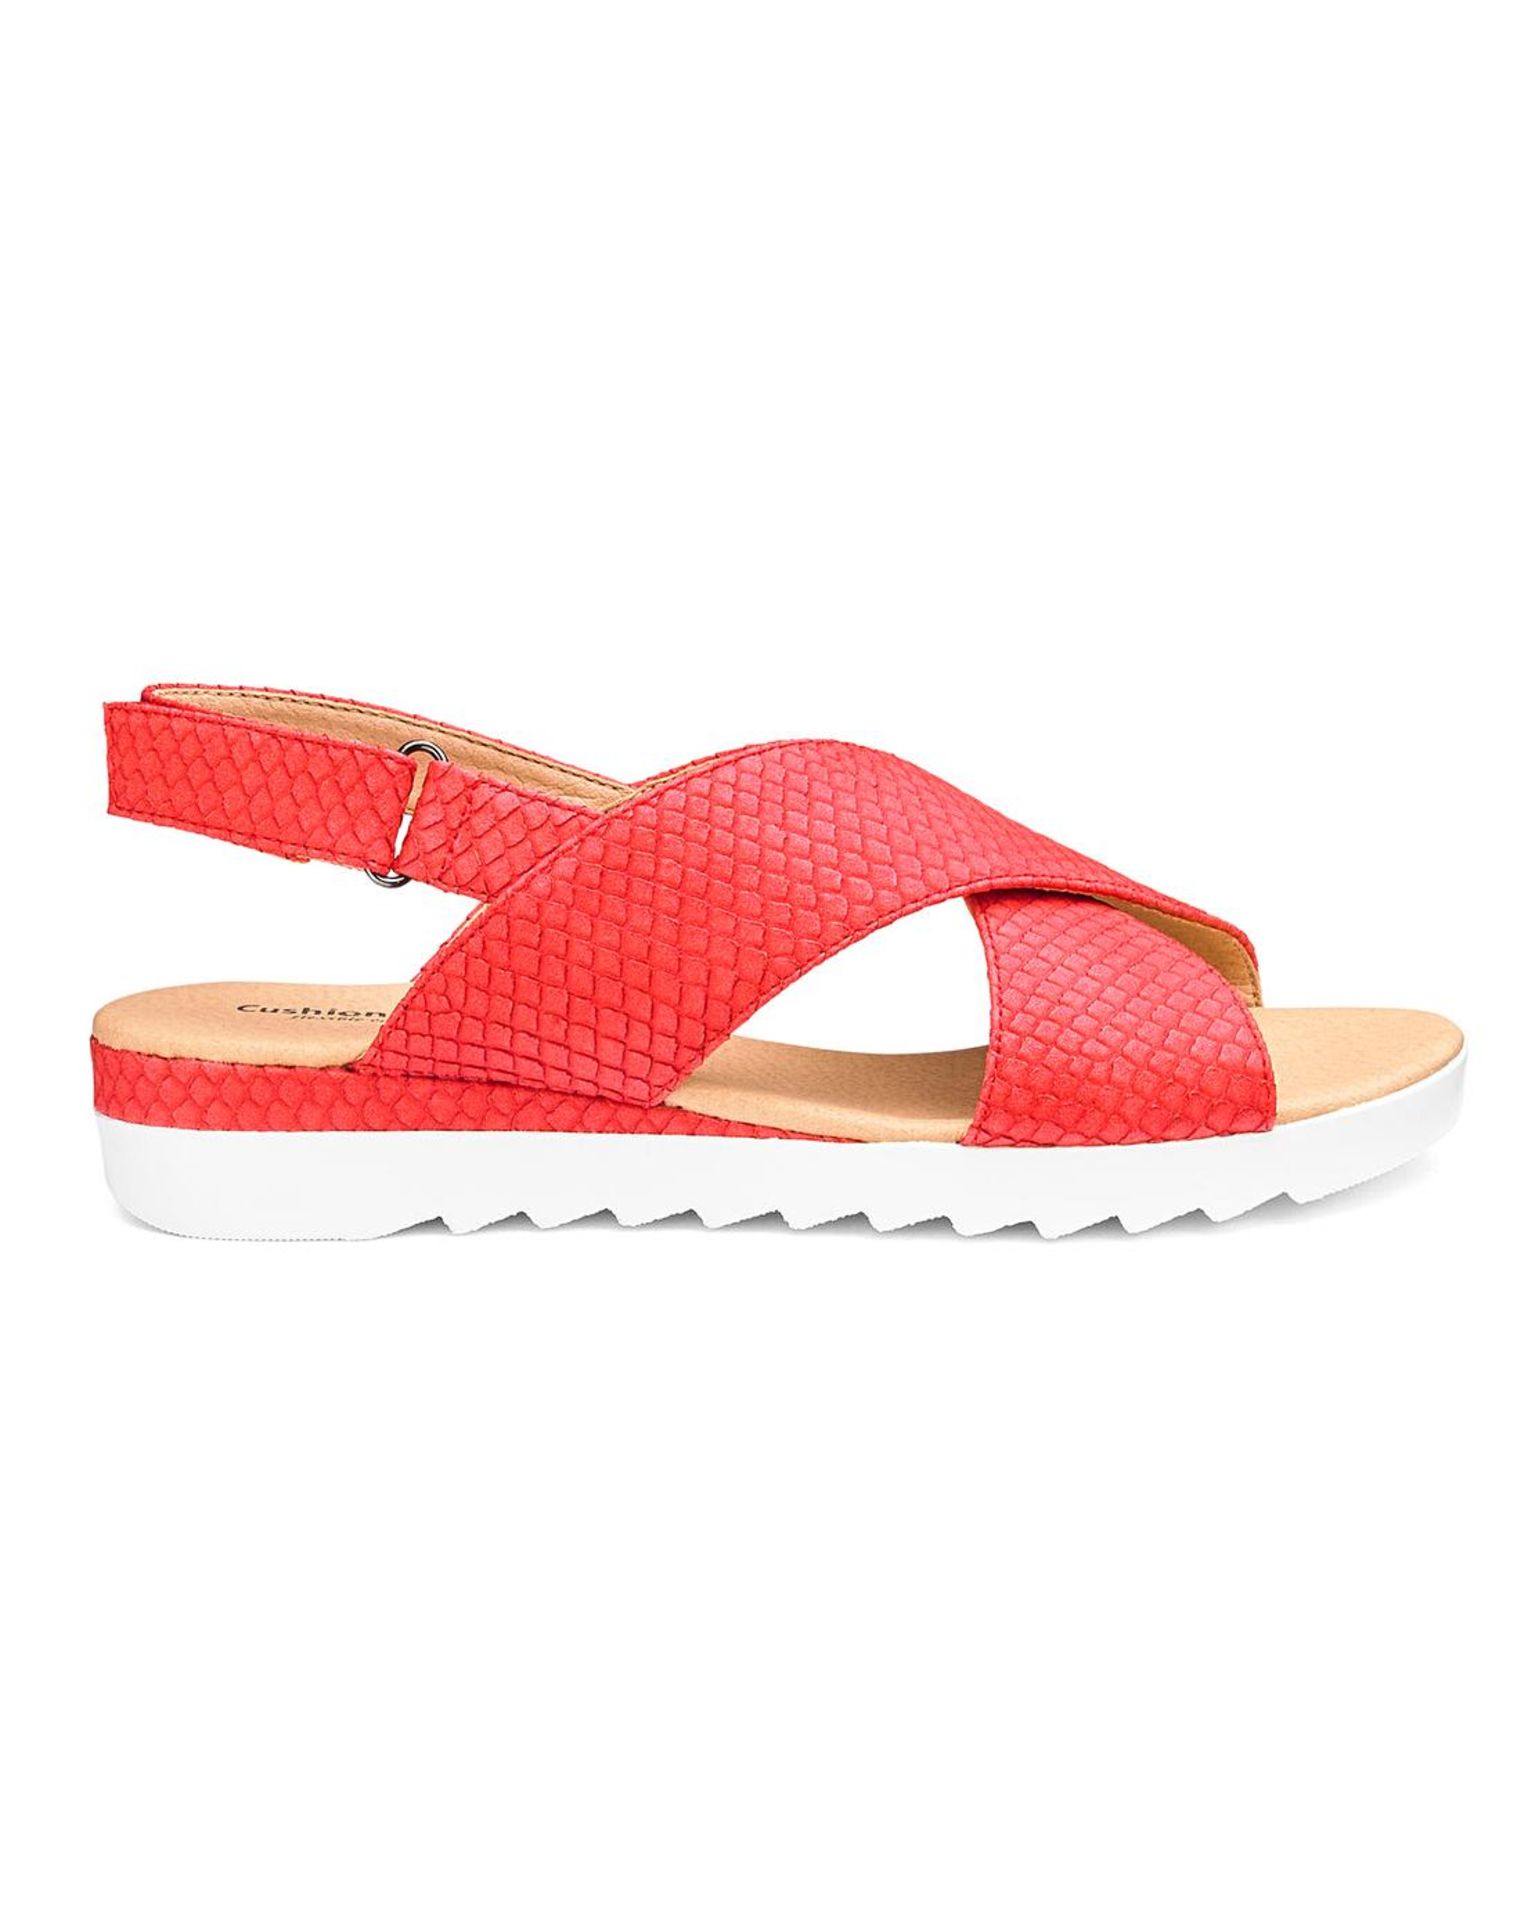 + VAT Brand New Pair Ladies EEE Fit Sandals Red Size 5